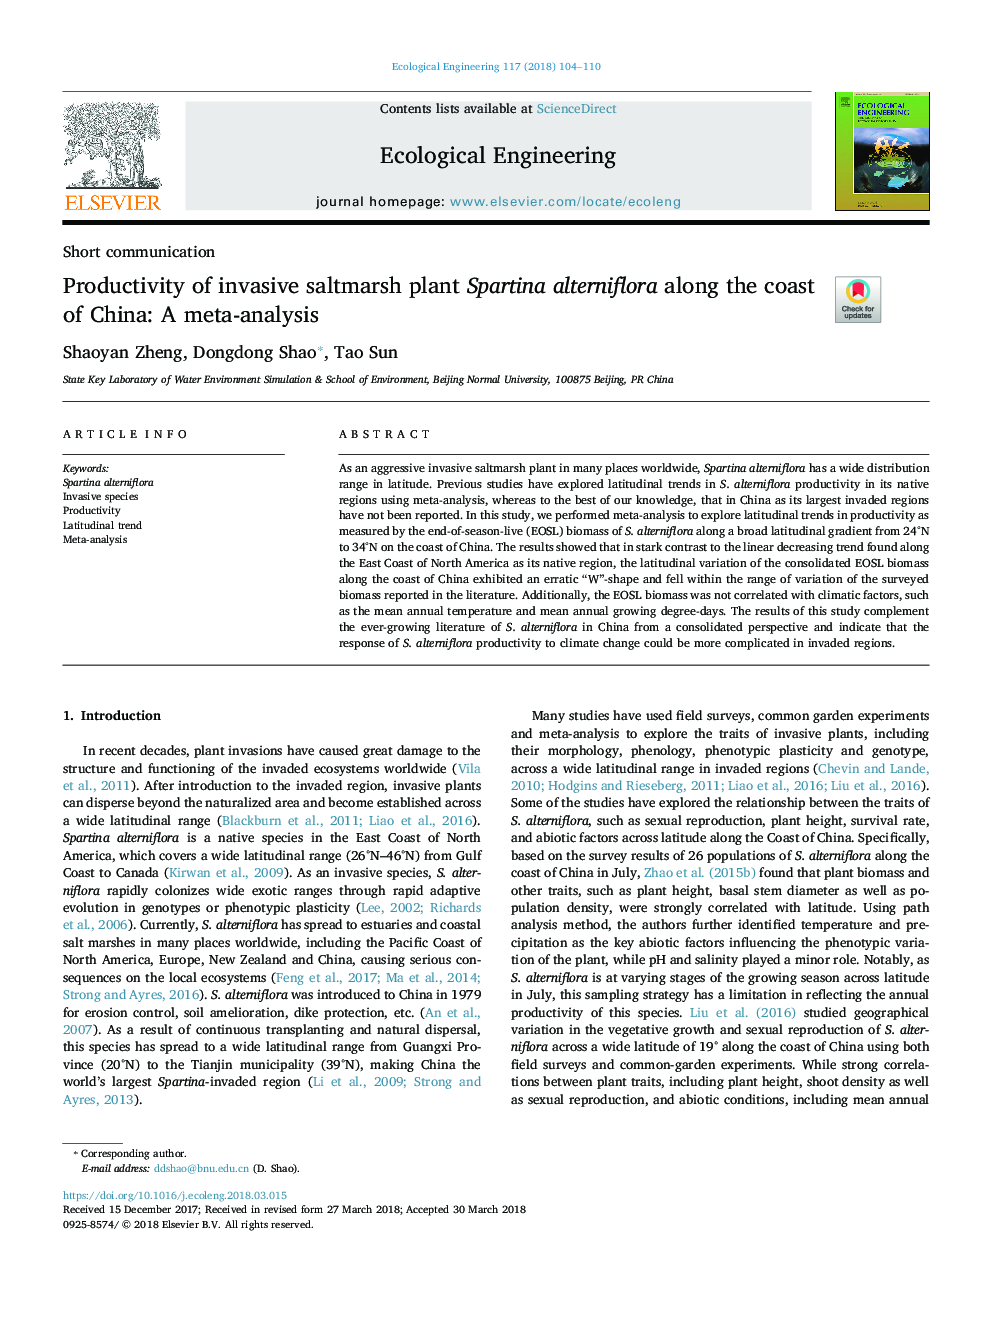 Productivity of invasive saltmarsh plant Spartina alterniflora along the coast of China: A meta-analysis